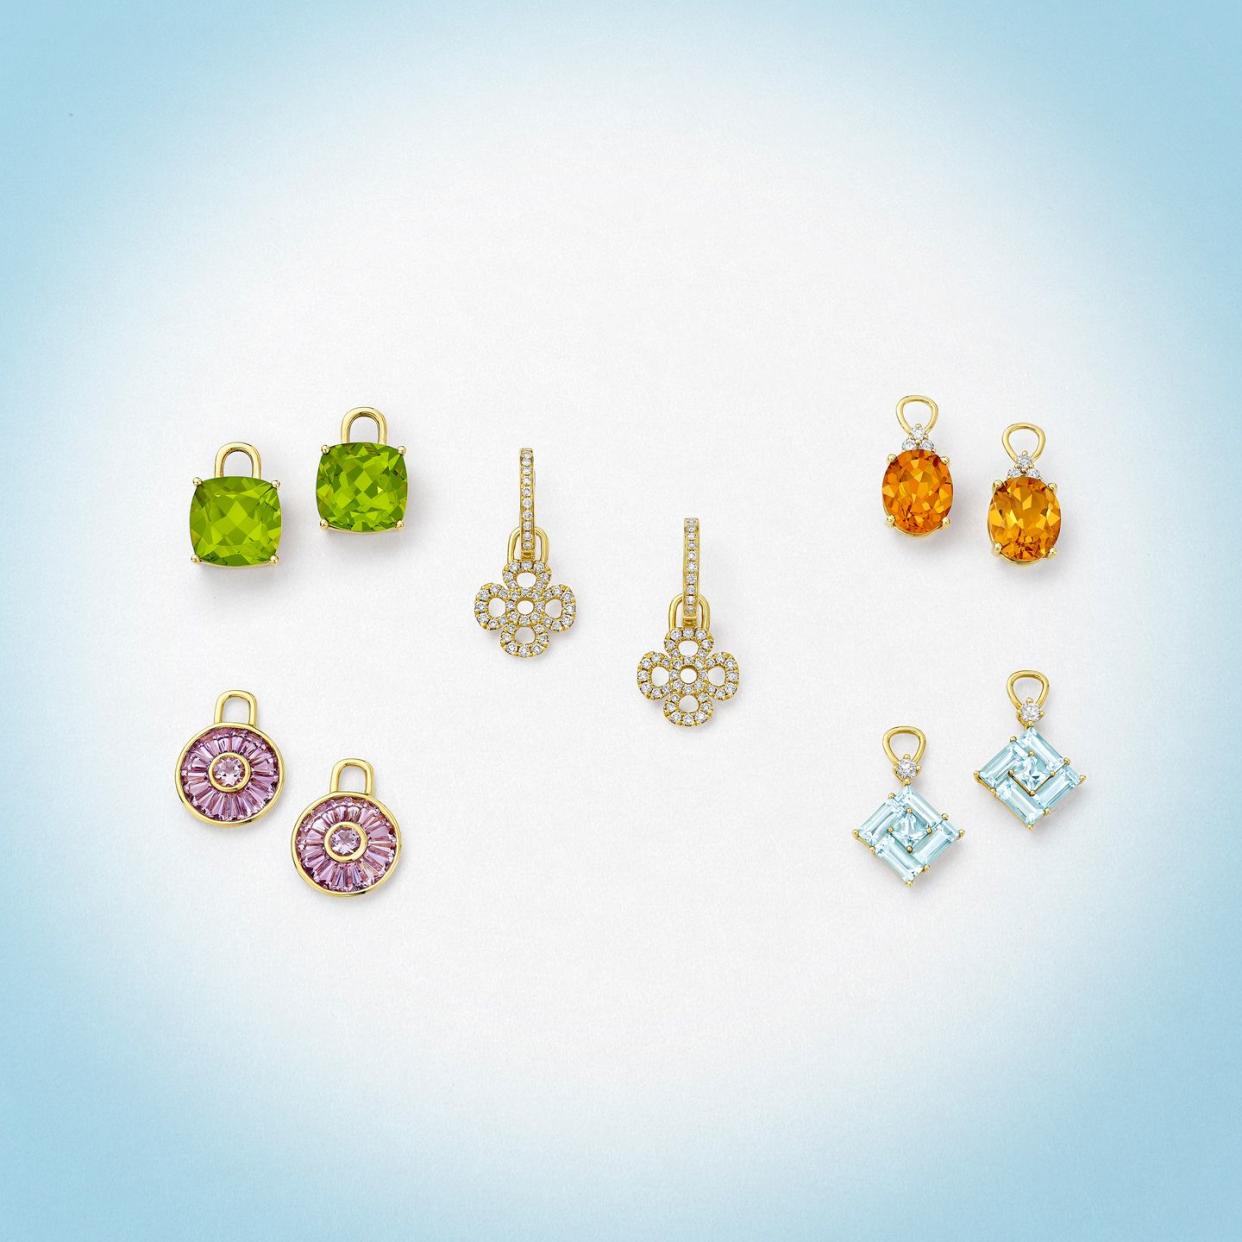 a group of earrings